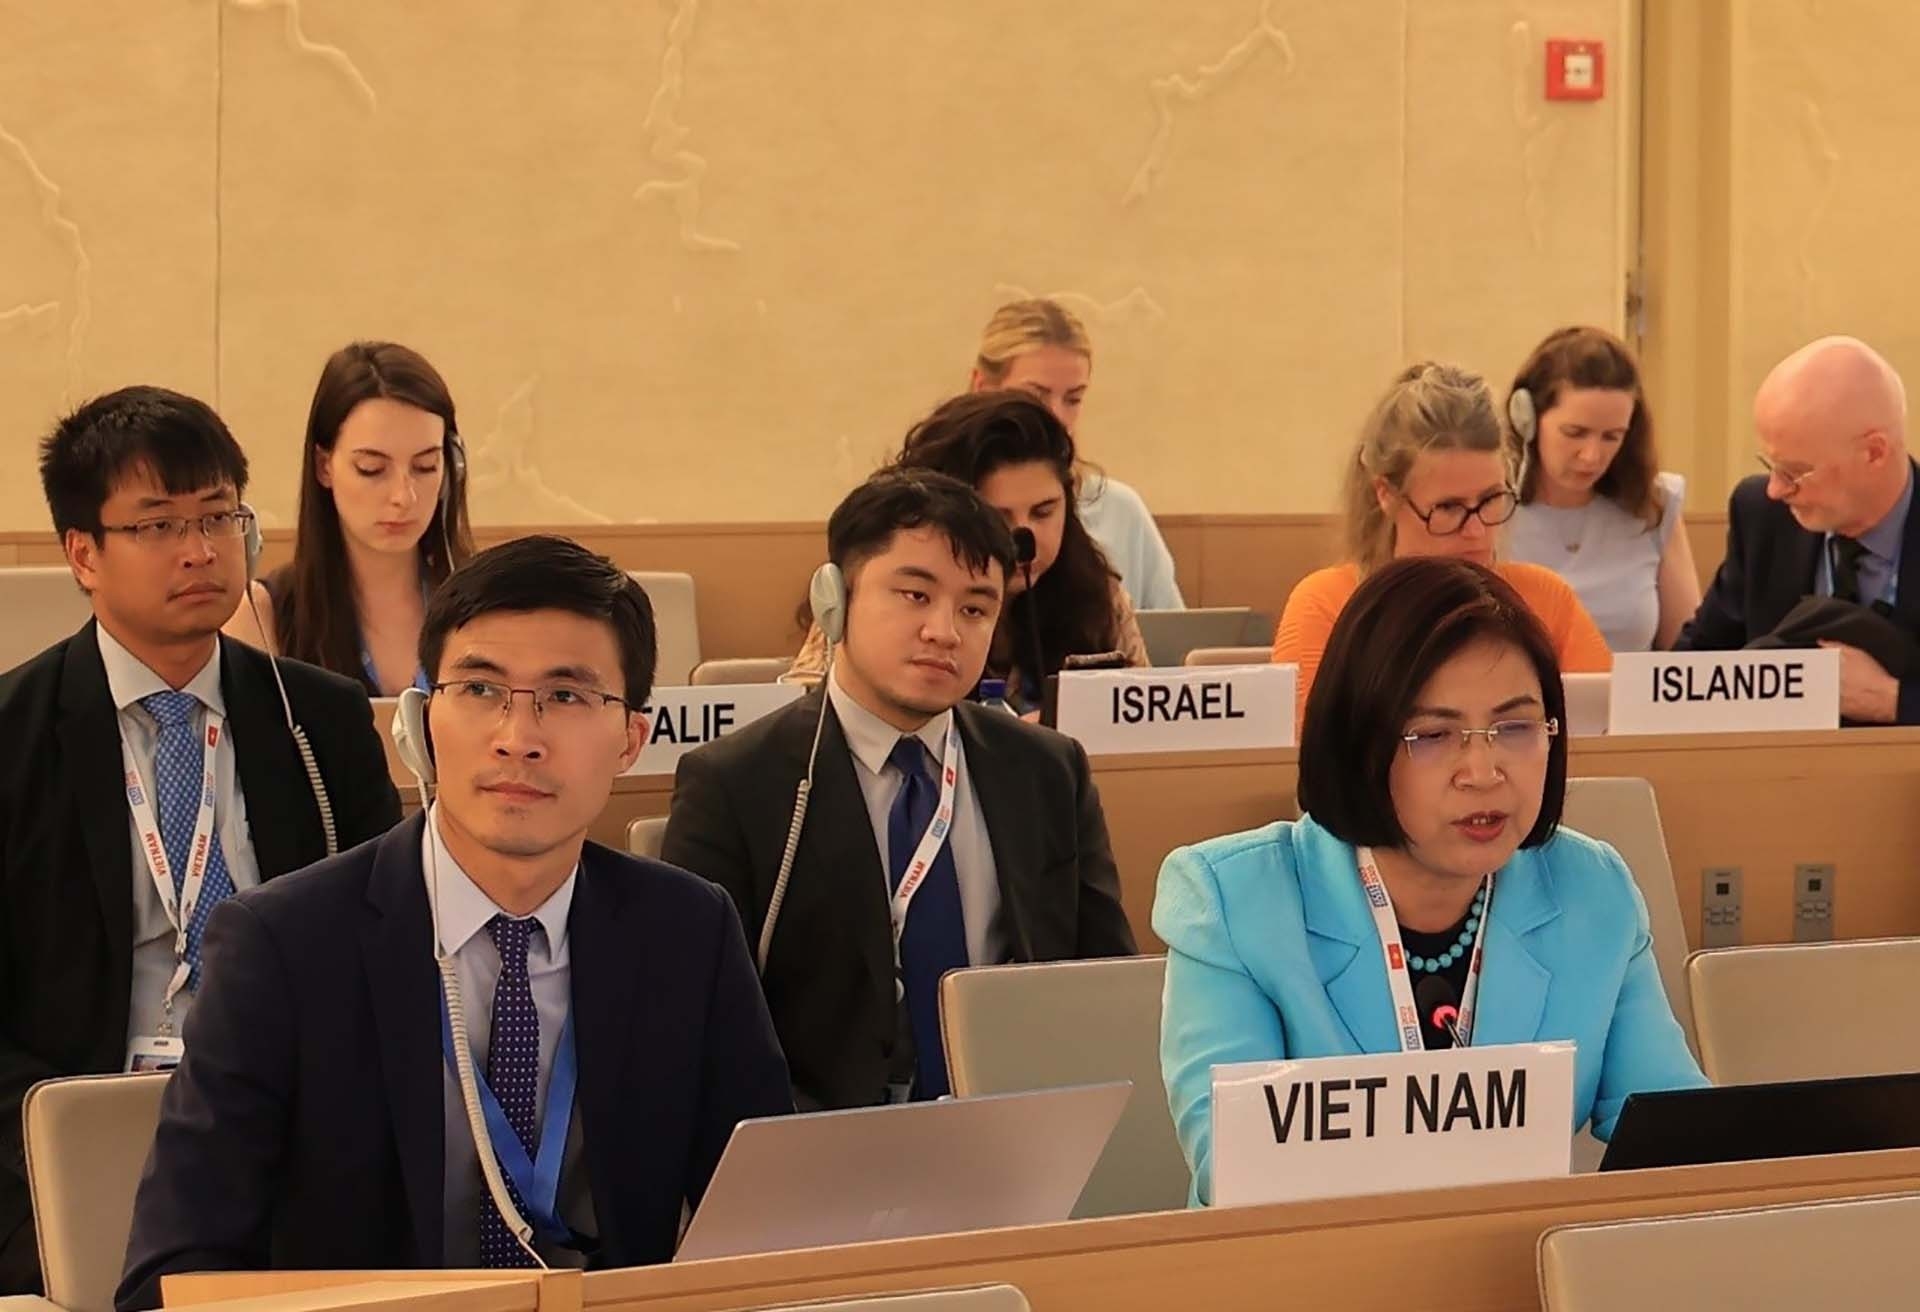 Bản in : 越南强调实质性对话和有效合作以促进和保护人权 | Vietnam+ (VietnamPlus)